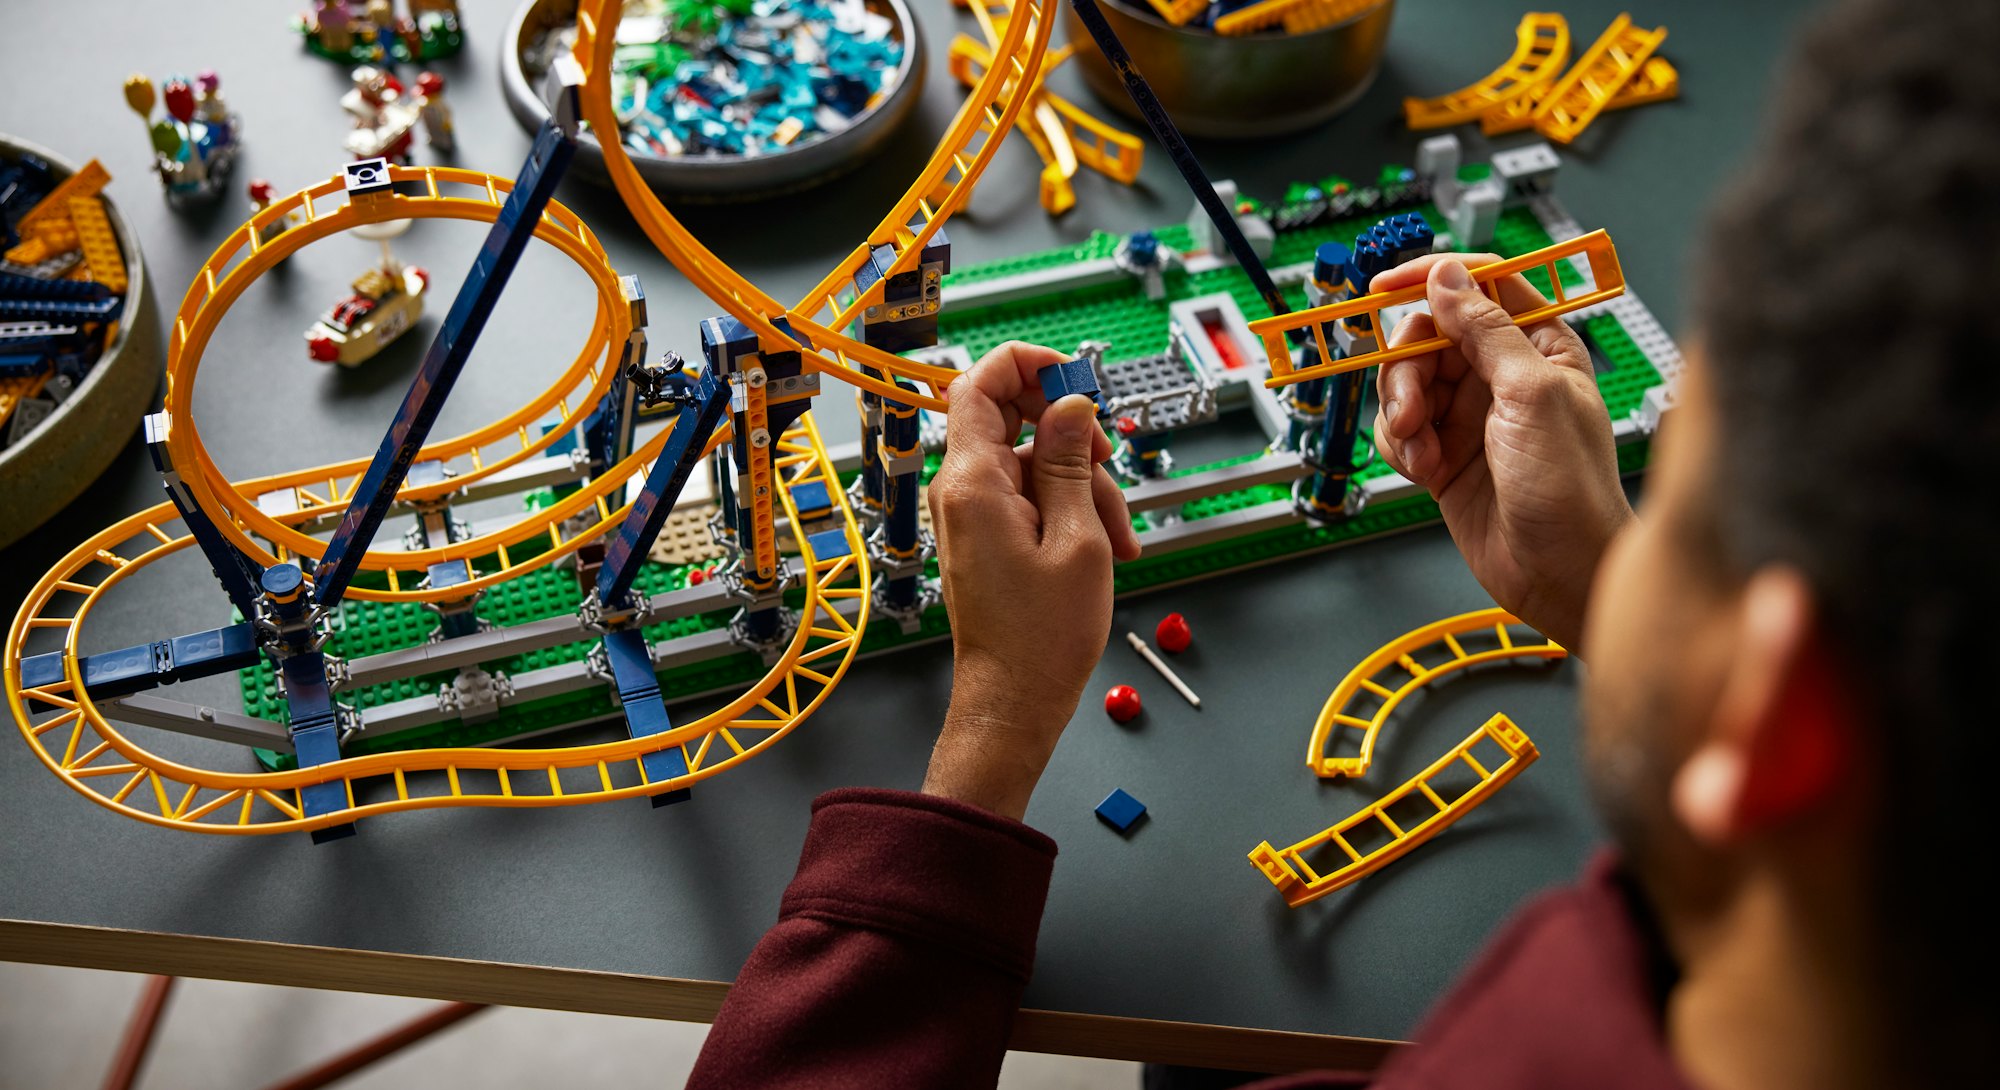 Lego's Loop Coaster set